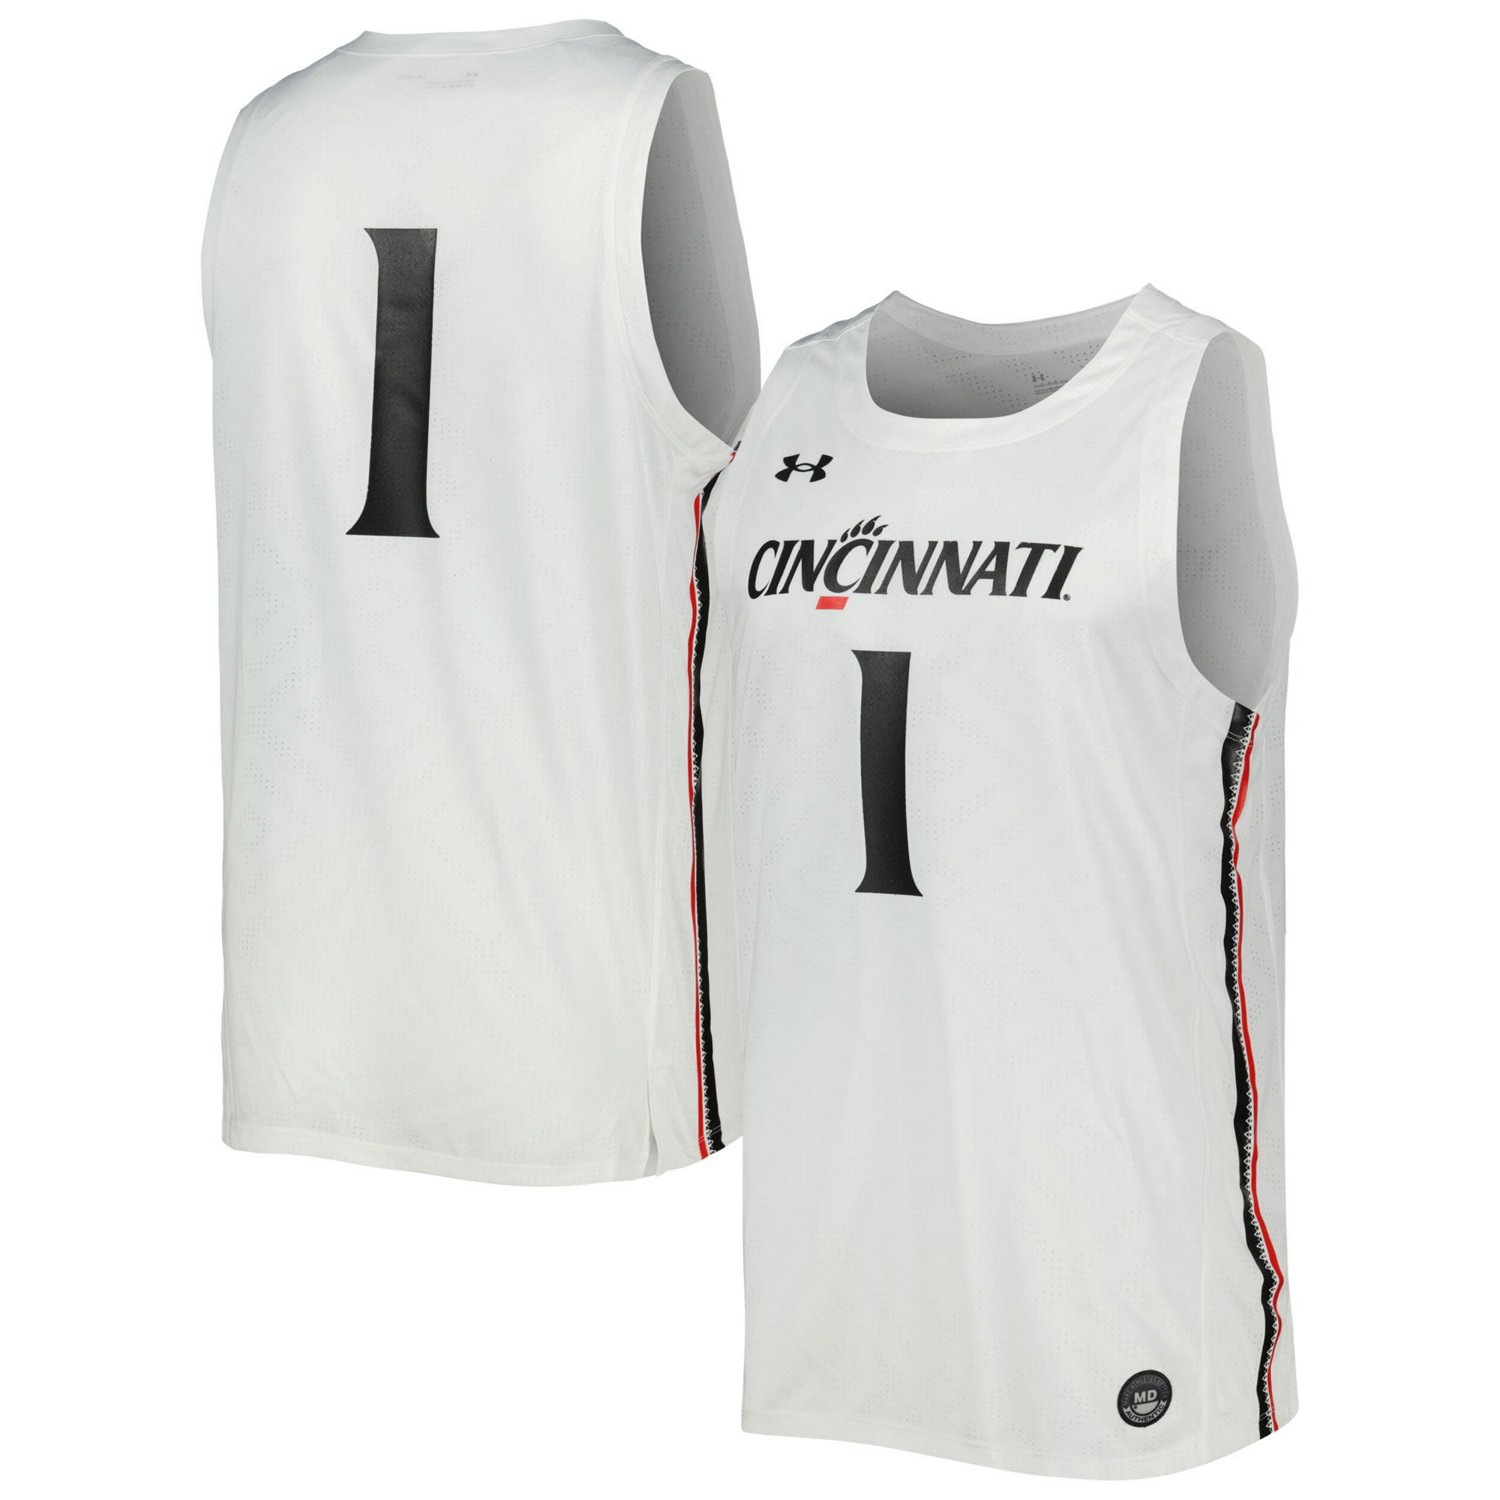 Men's Under Armour White Cincinnati Bearcats Replica Basketball Jersey